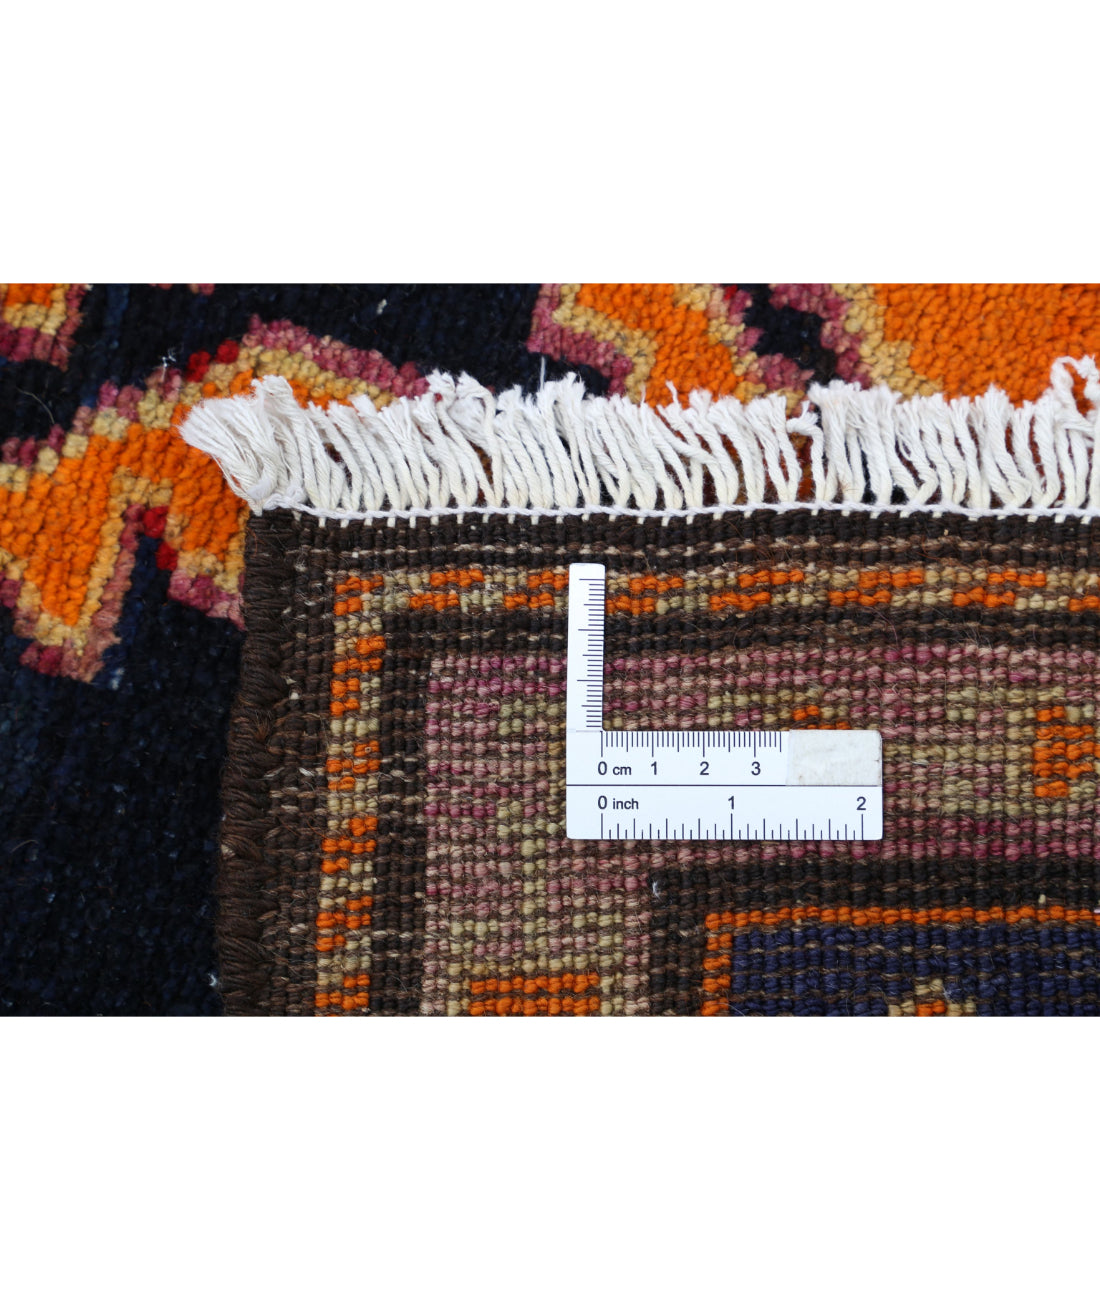 Hand Knotted Persian Hamadan Wool Rug - 4'2'' x 16'0'' 4'2'' x 16'0'' (125 X 480) / Blue / Rust